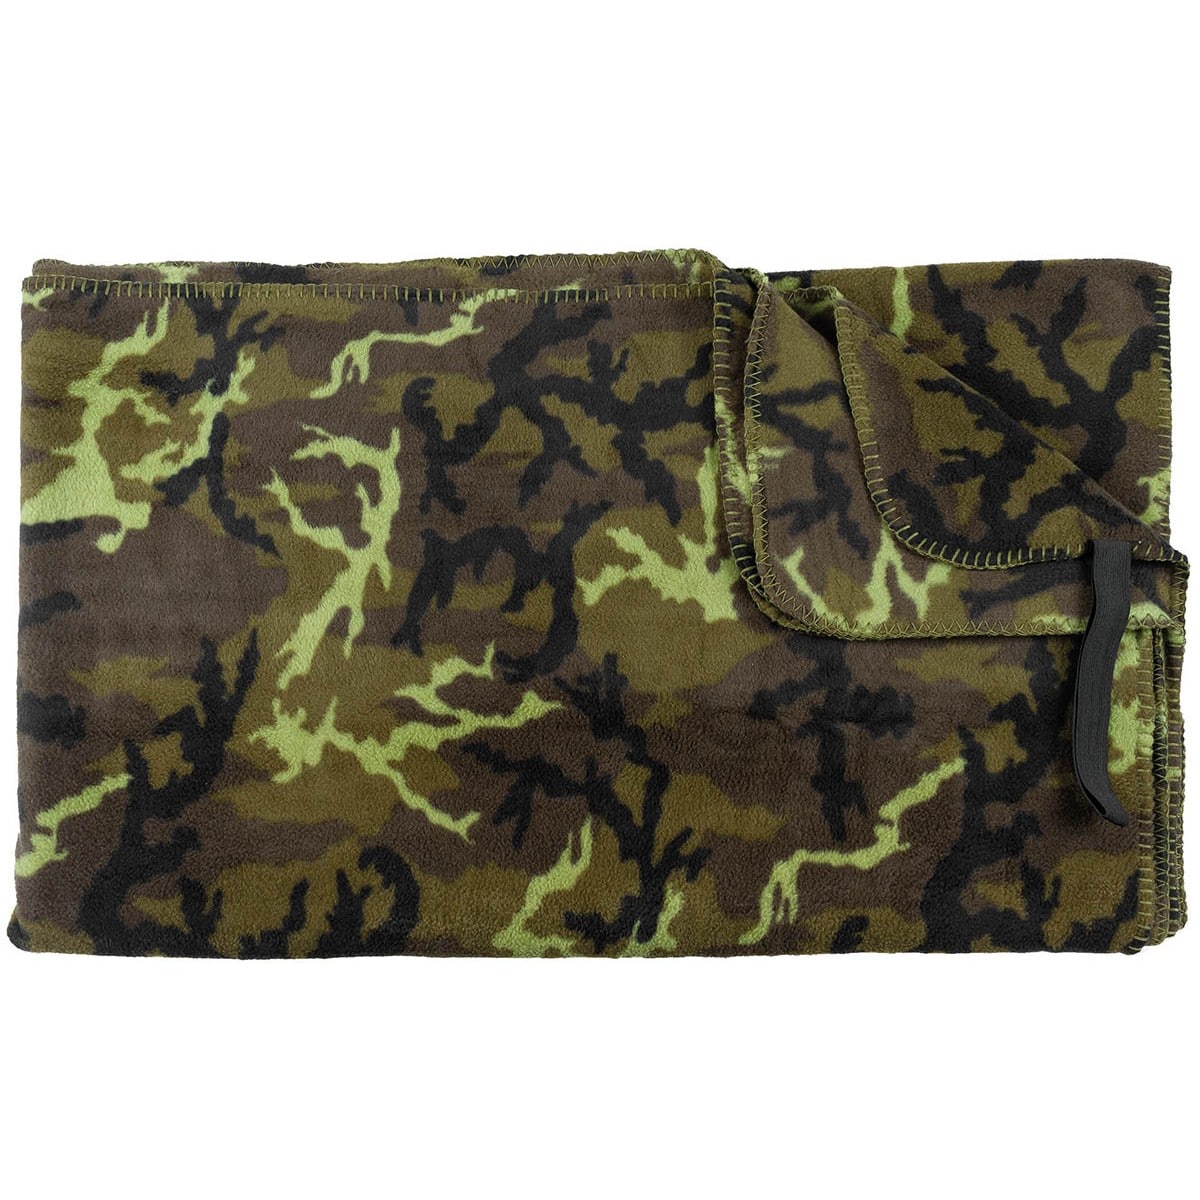 Koc MFH Fleece Blanket - M95 CZ Camo